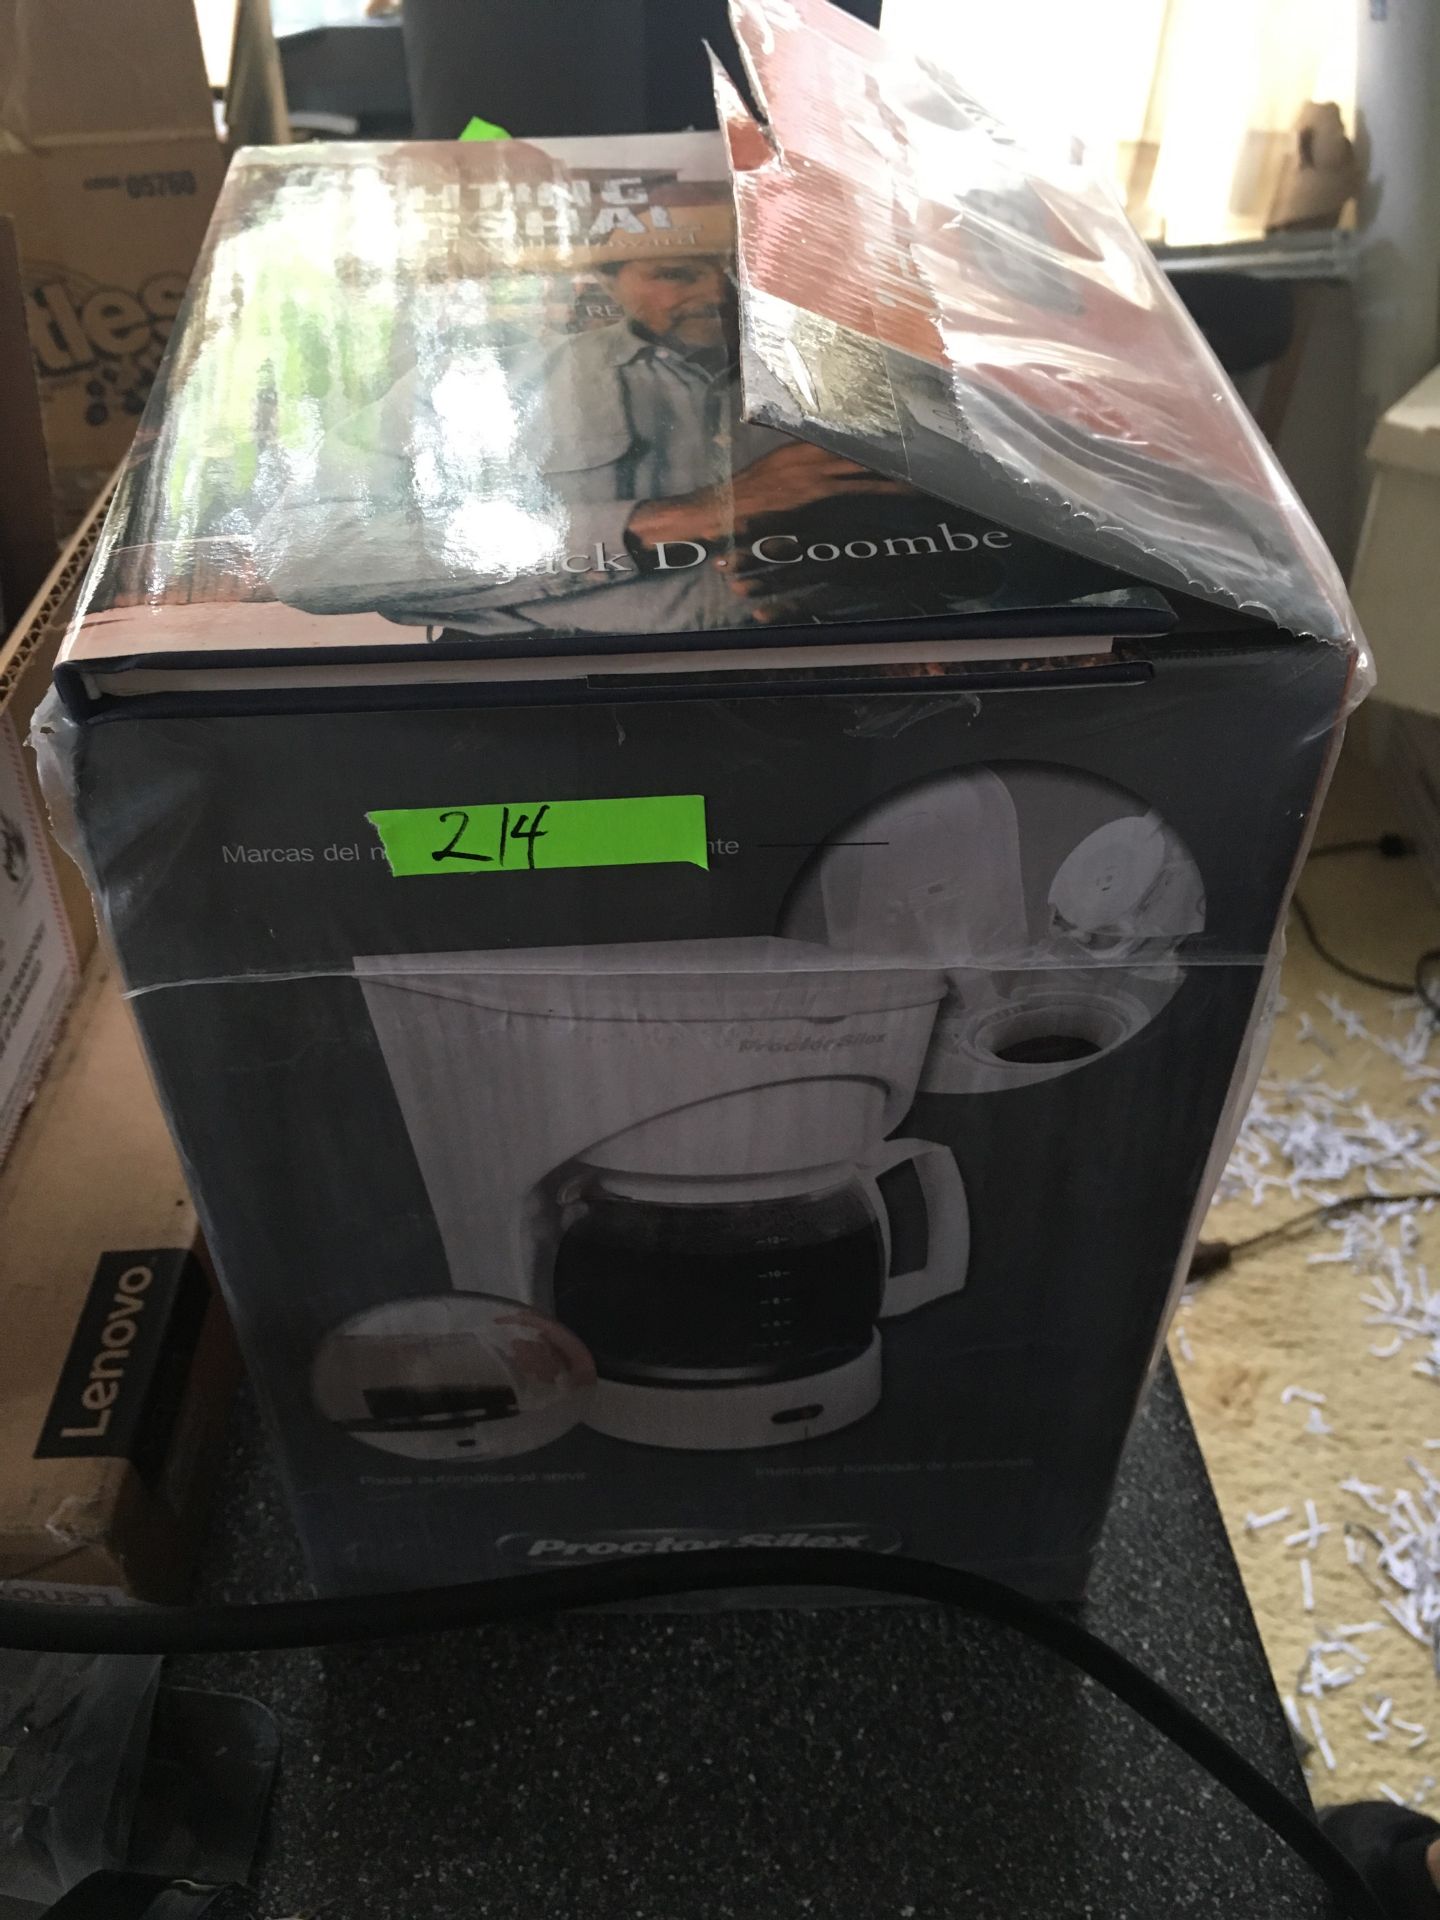 Proctor silex coffee maker in box